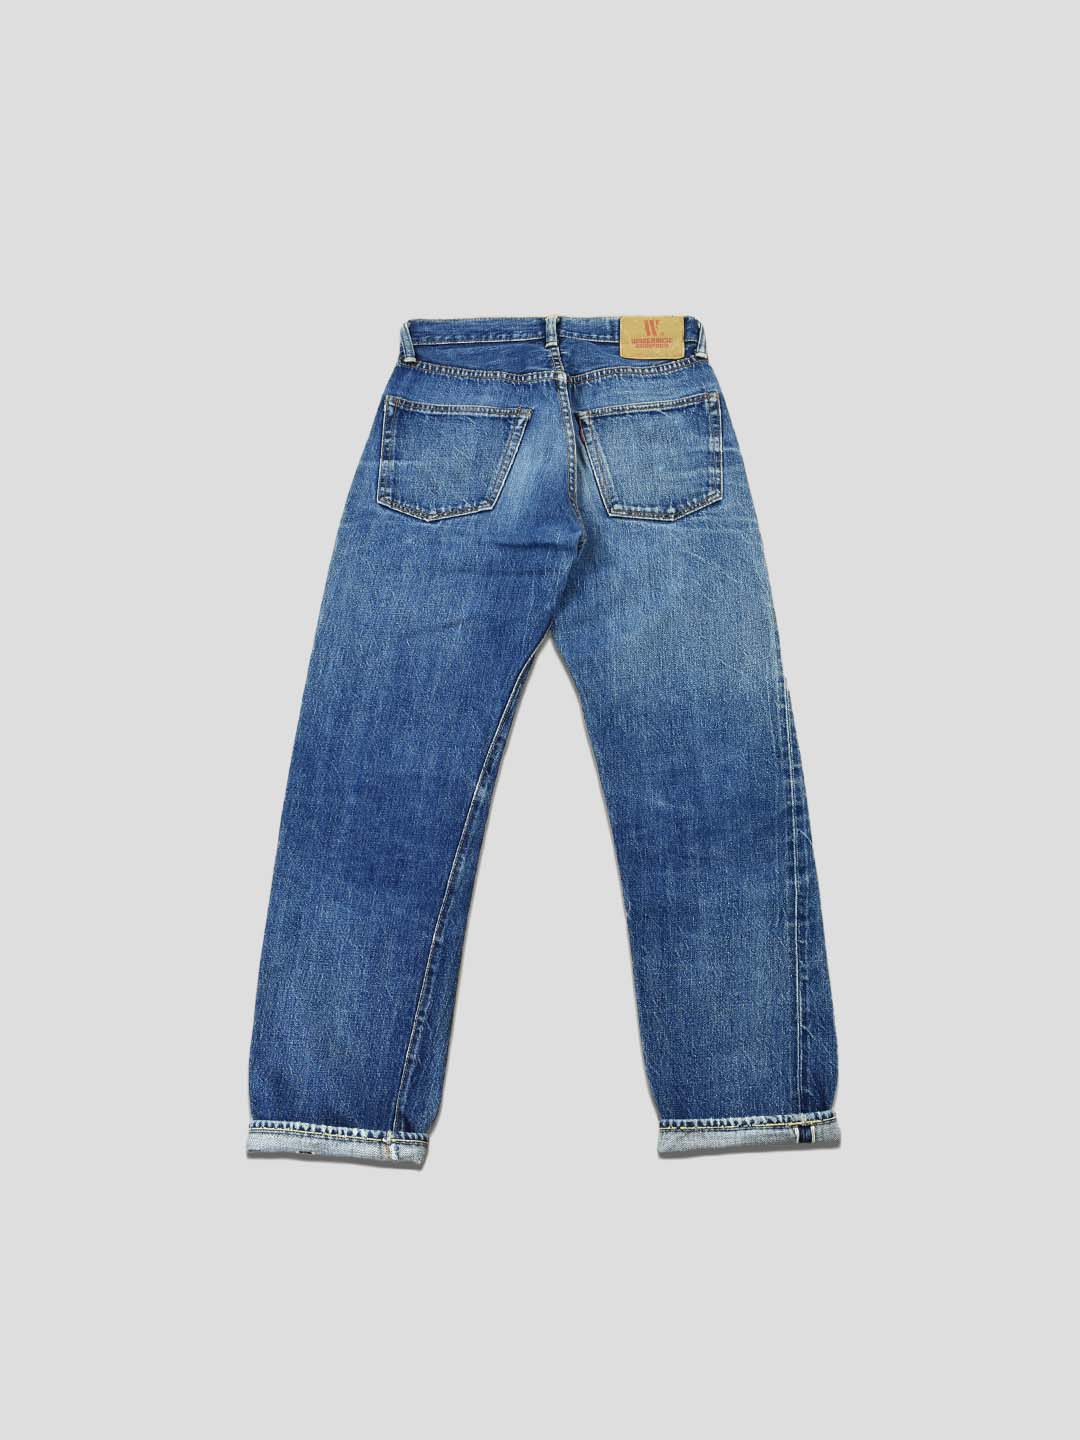 [26] Warehouse 1100XX Selvedge Denim Jeans